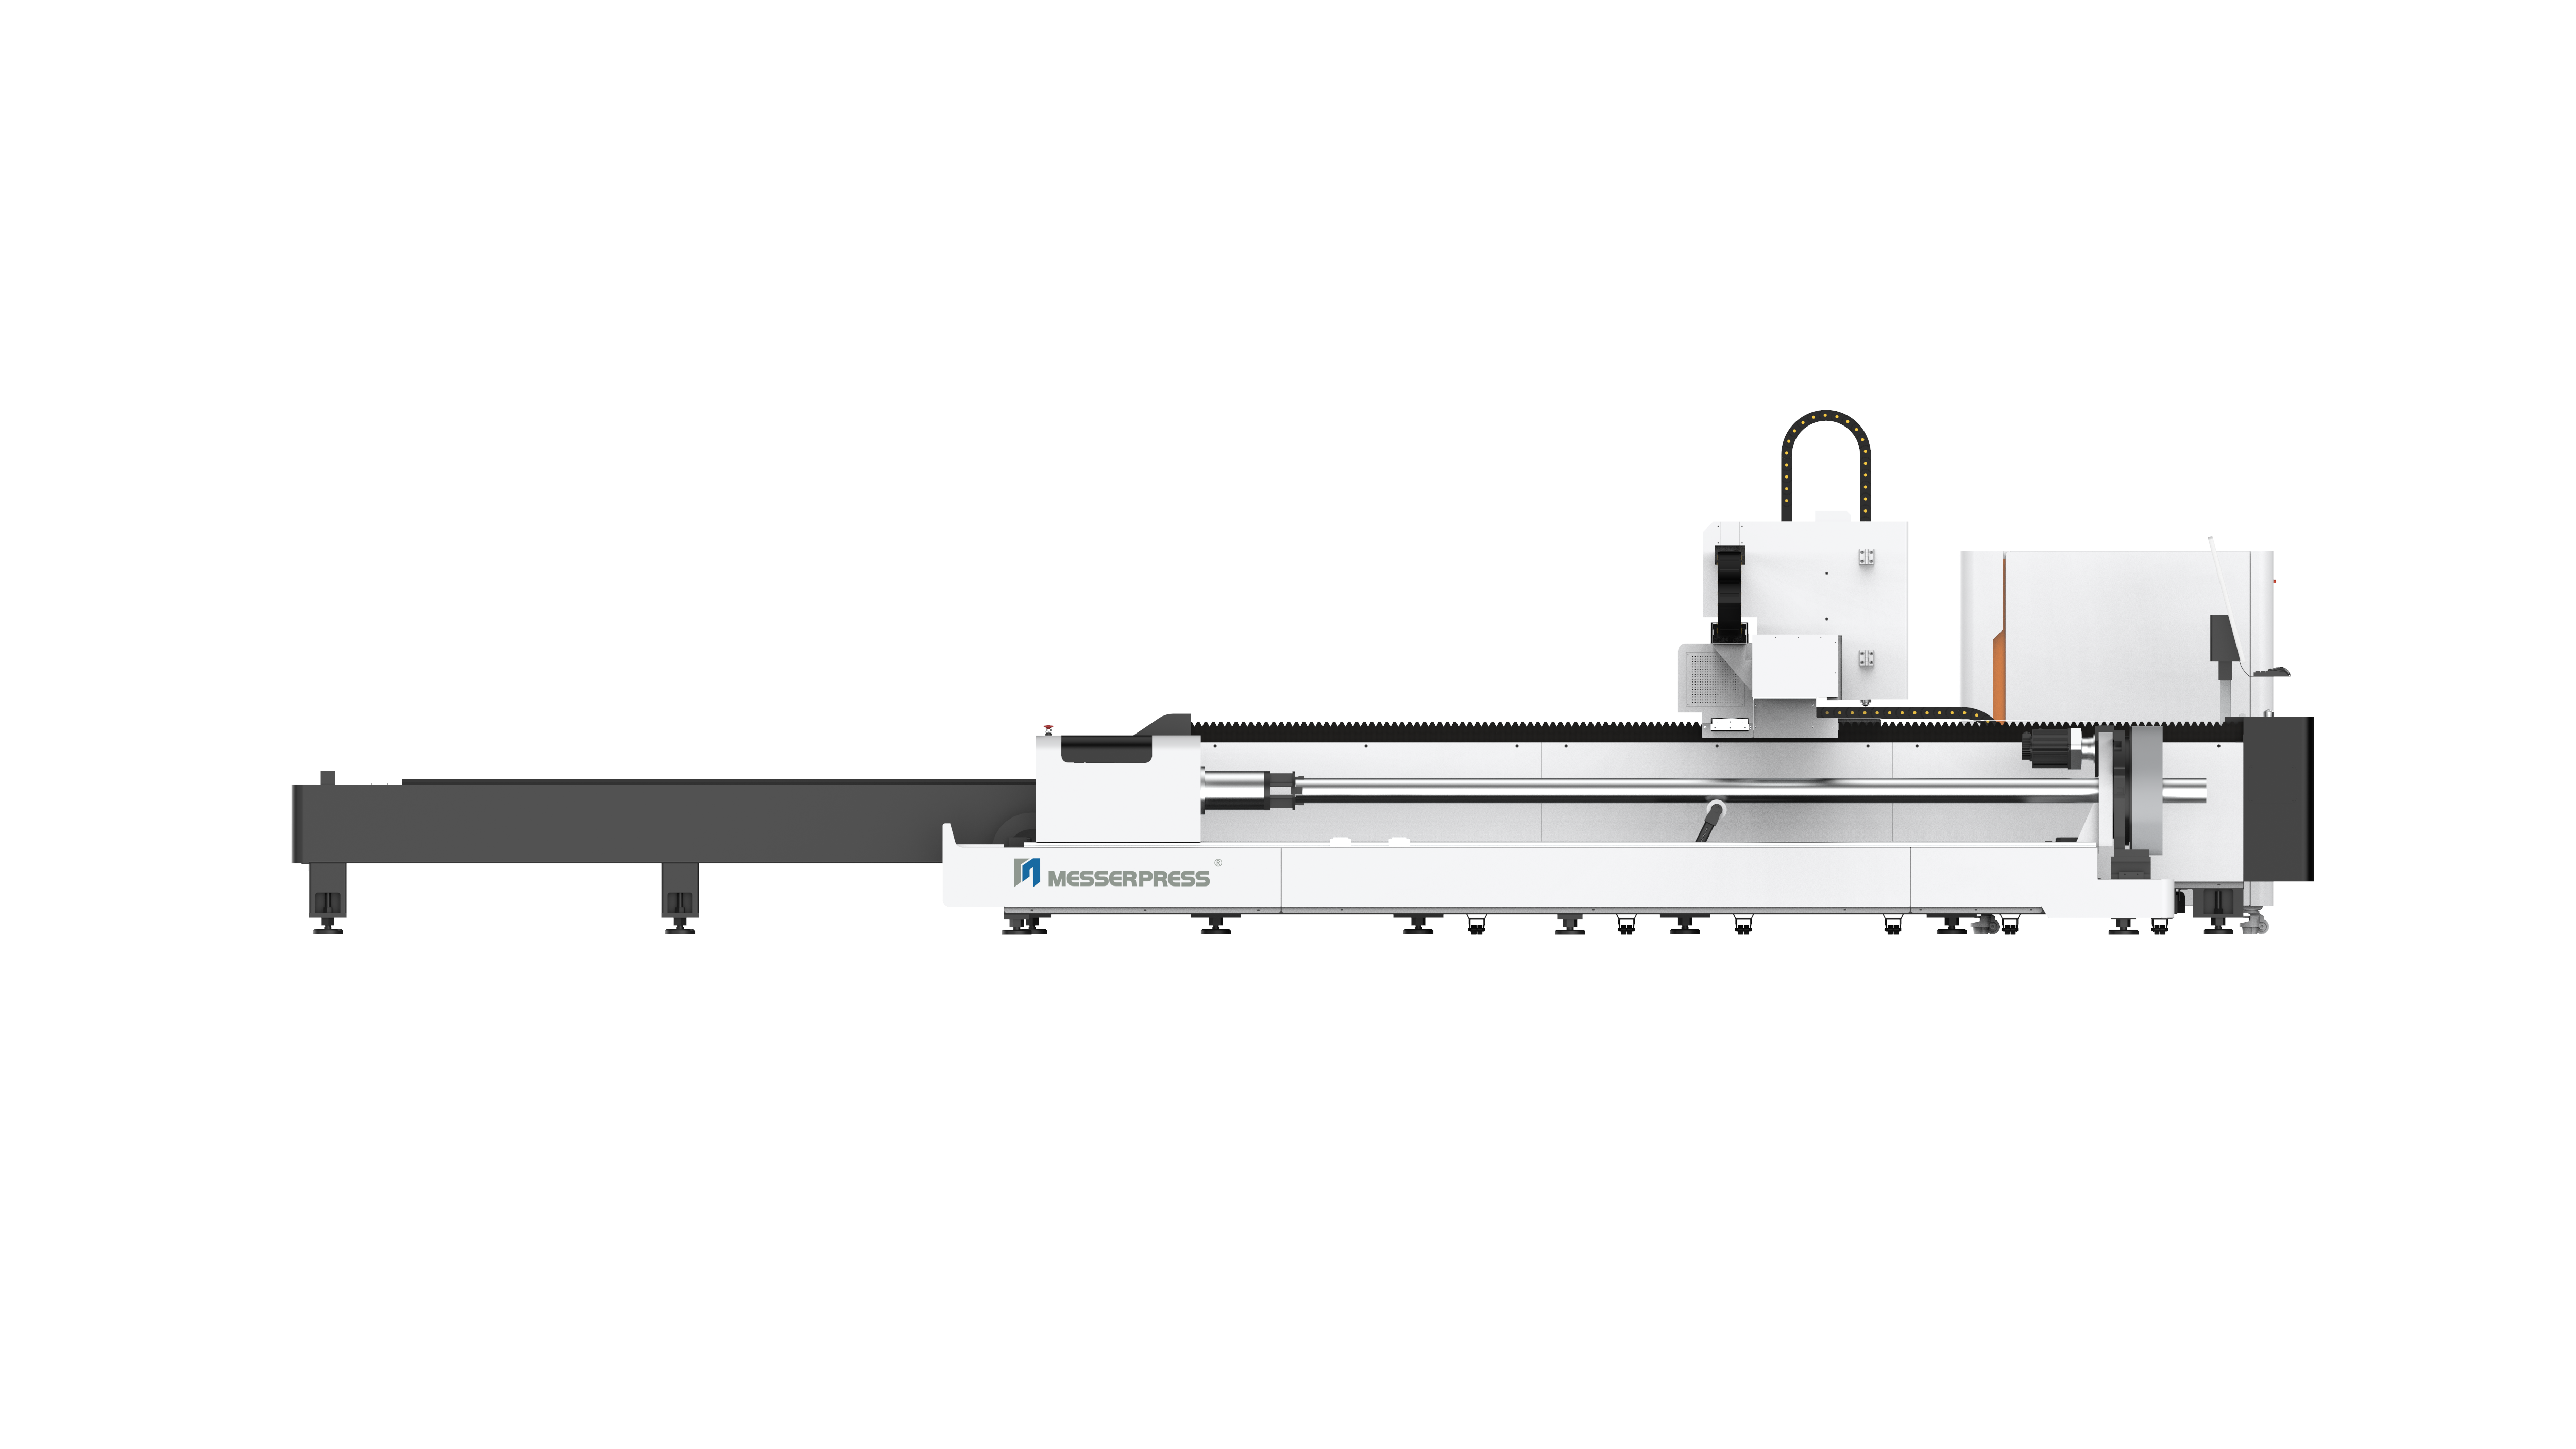 Hot Sale Plate And Tube Metal CNC Fiber Laser Cutting Machine For Salemetal Sheet Laser Cutting Machine